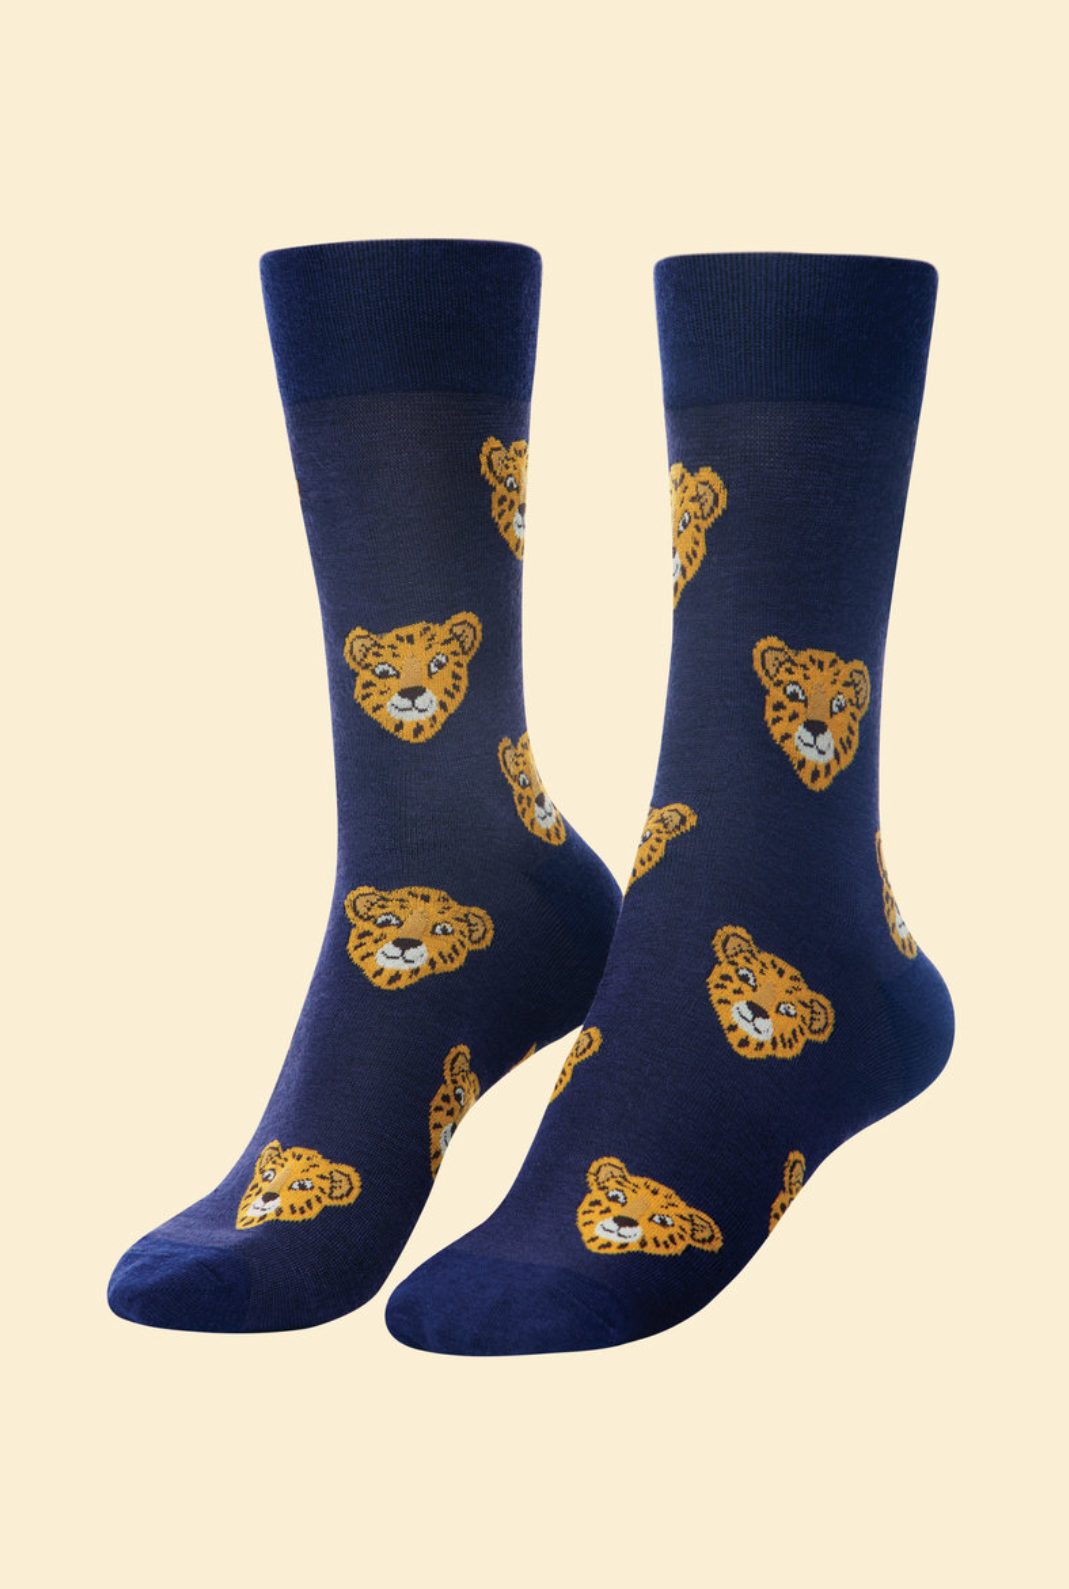 Powder UK Men's Charming Cheetah socks navy blue